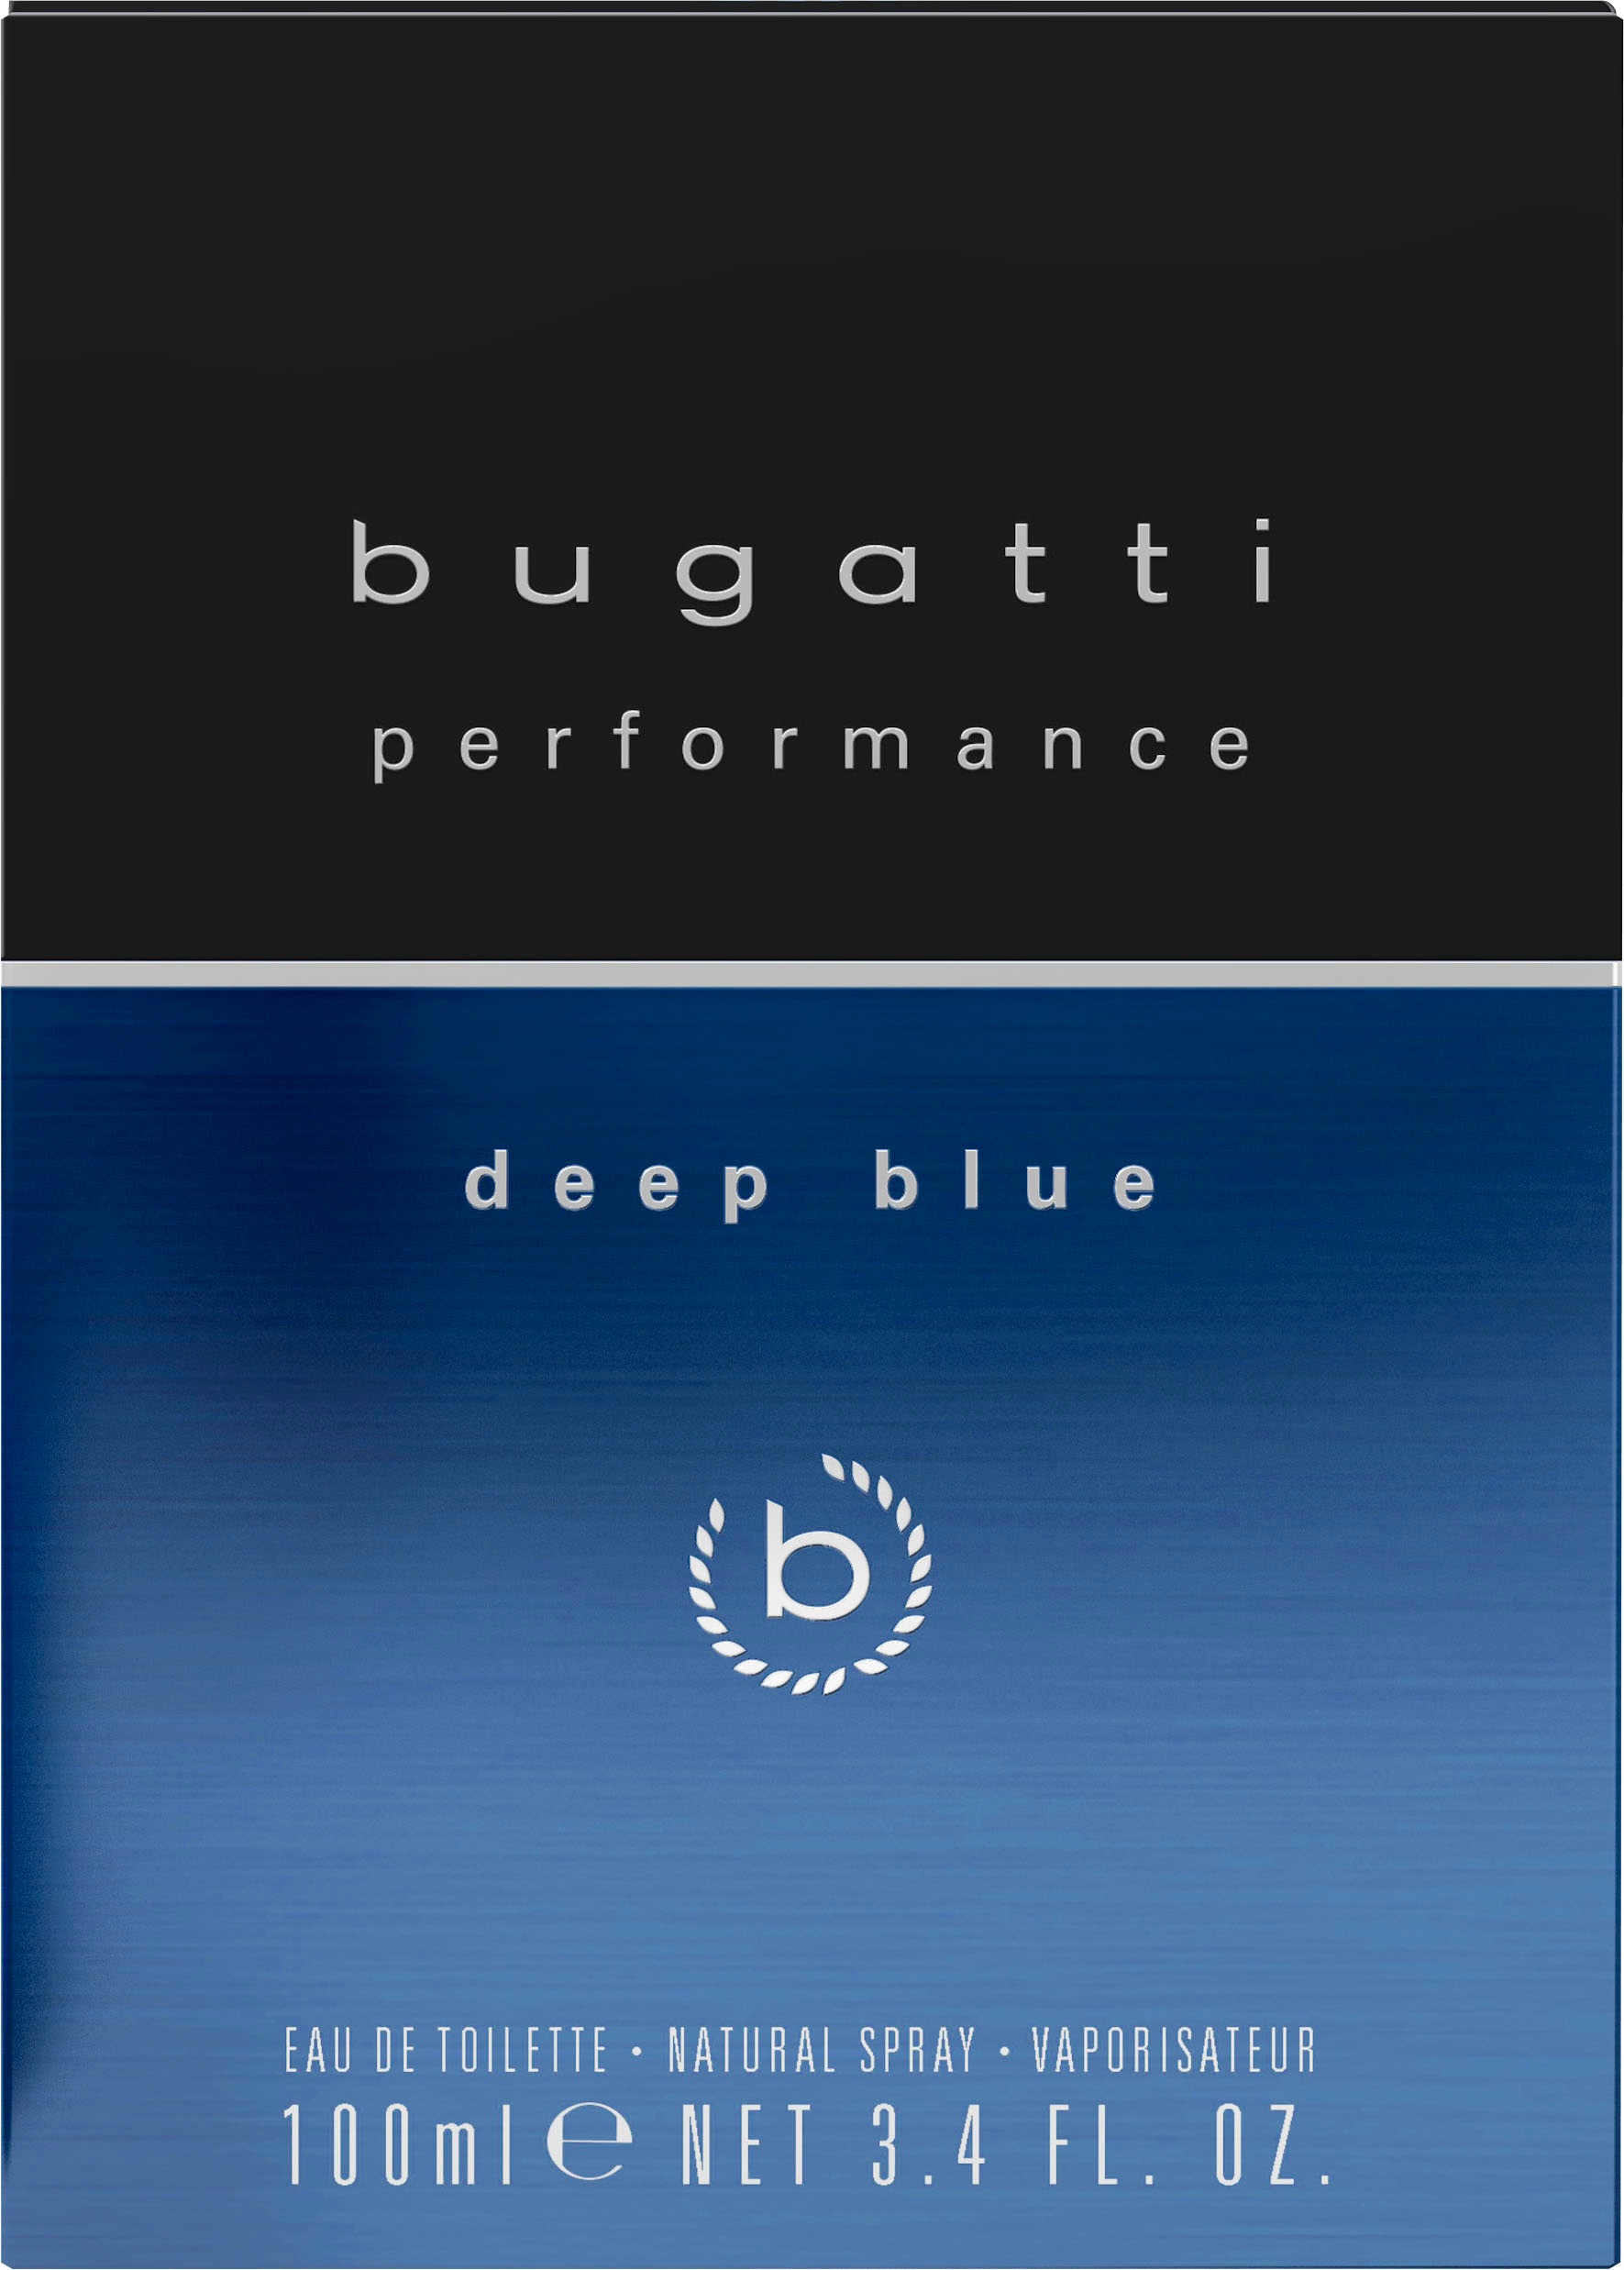 Toilette bugatti OTTO Eau bestellen Blue bei »BUGATTI Performance Deep de EdT 100ml«